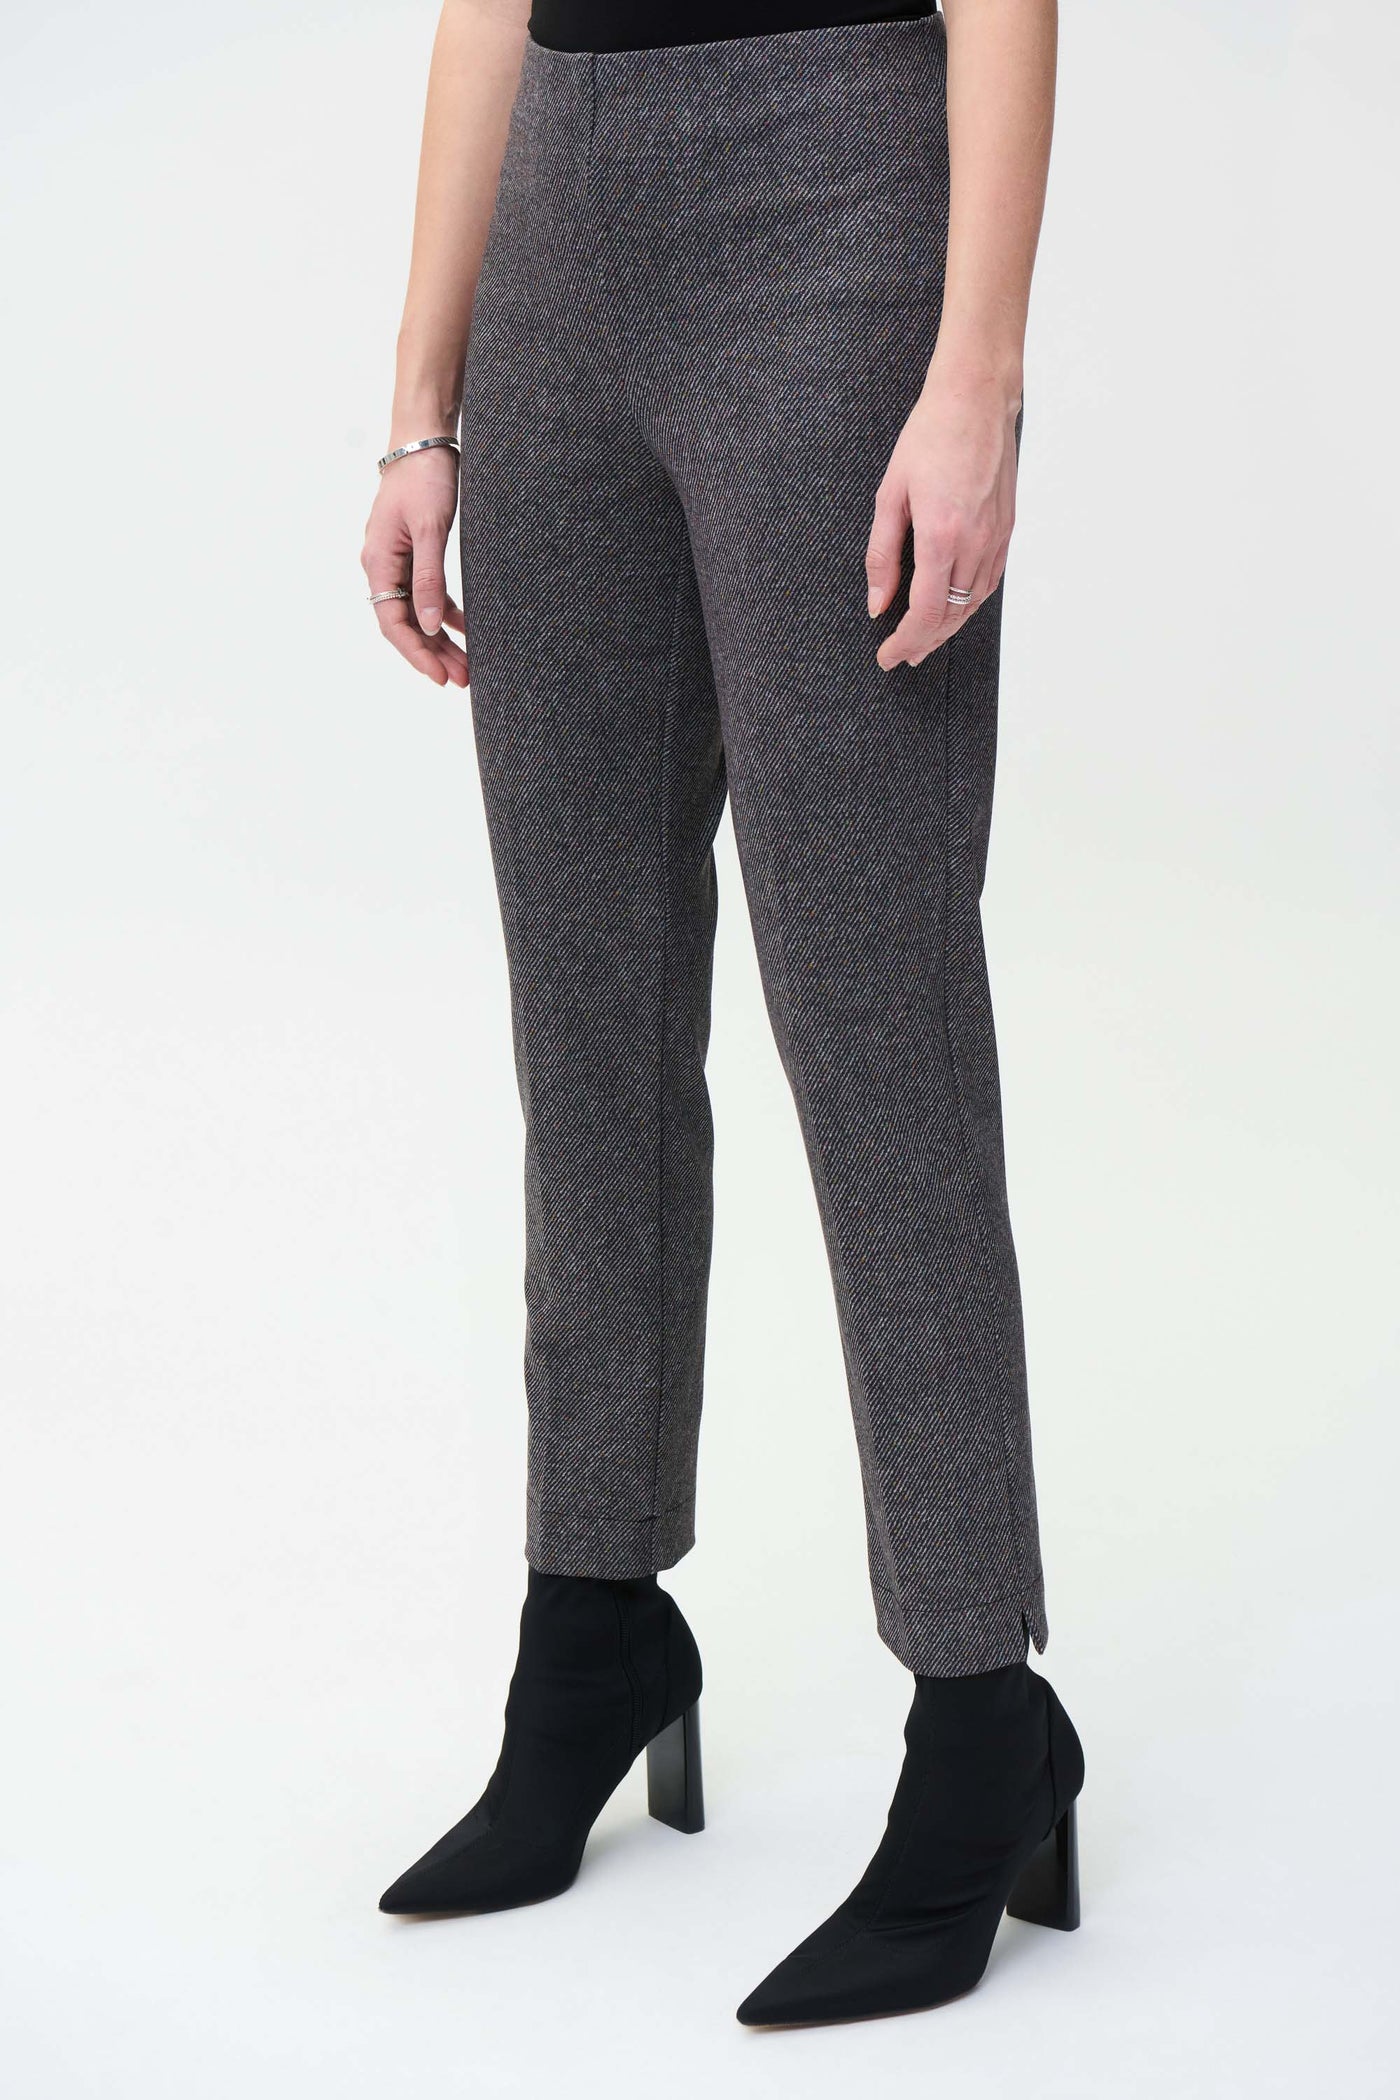 Joseph Ribkoff Slim Leg Pants Style 224104 Front.